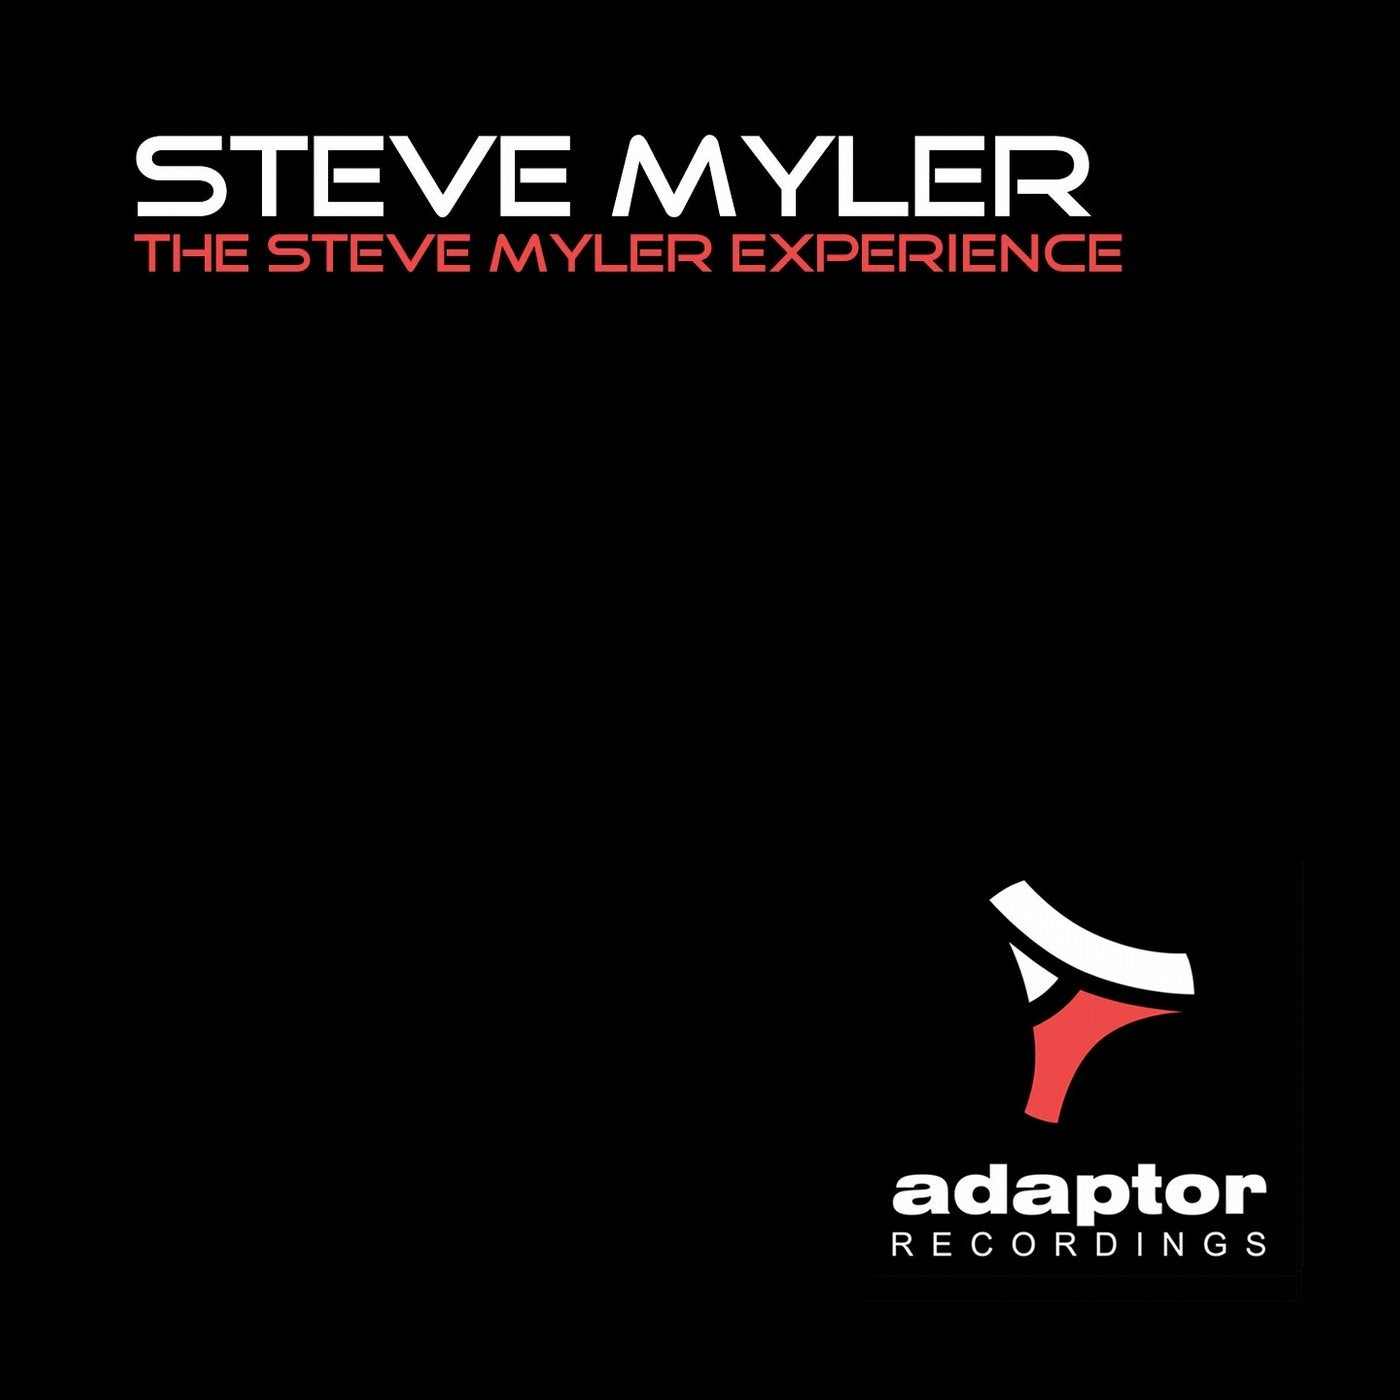 The Steve Myler Experience